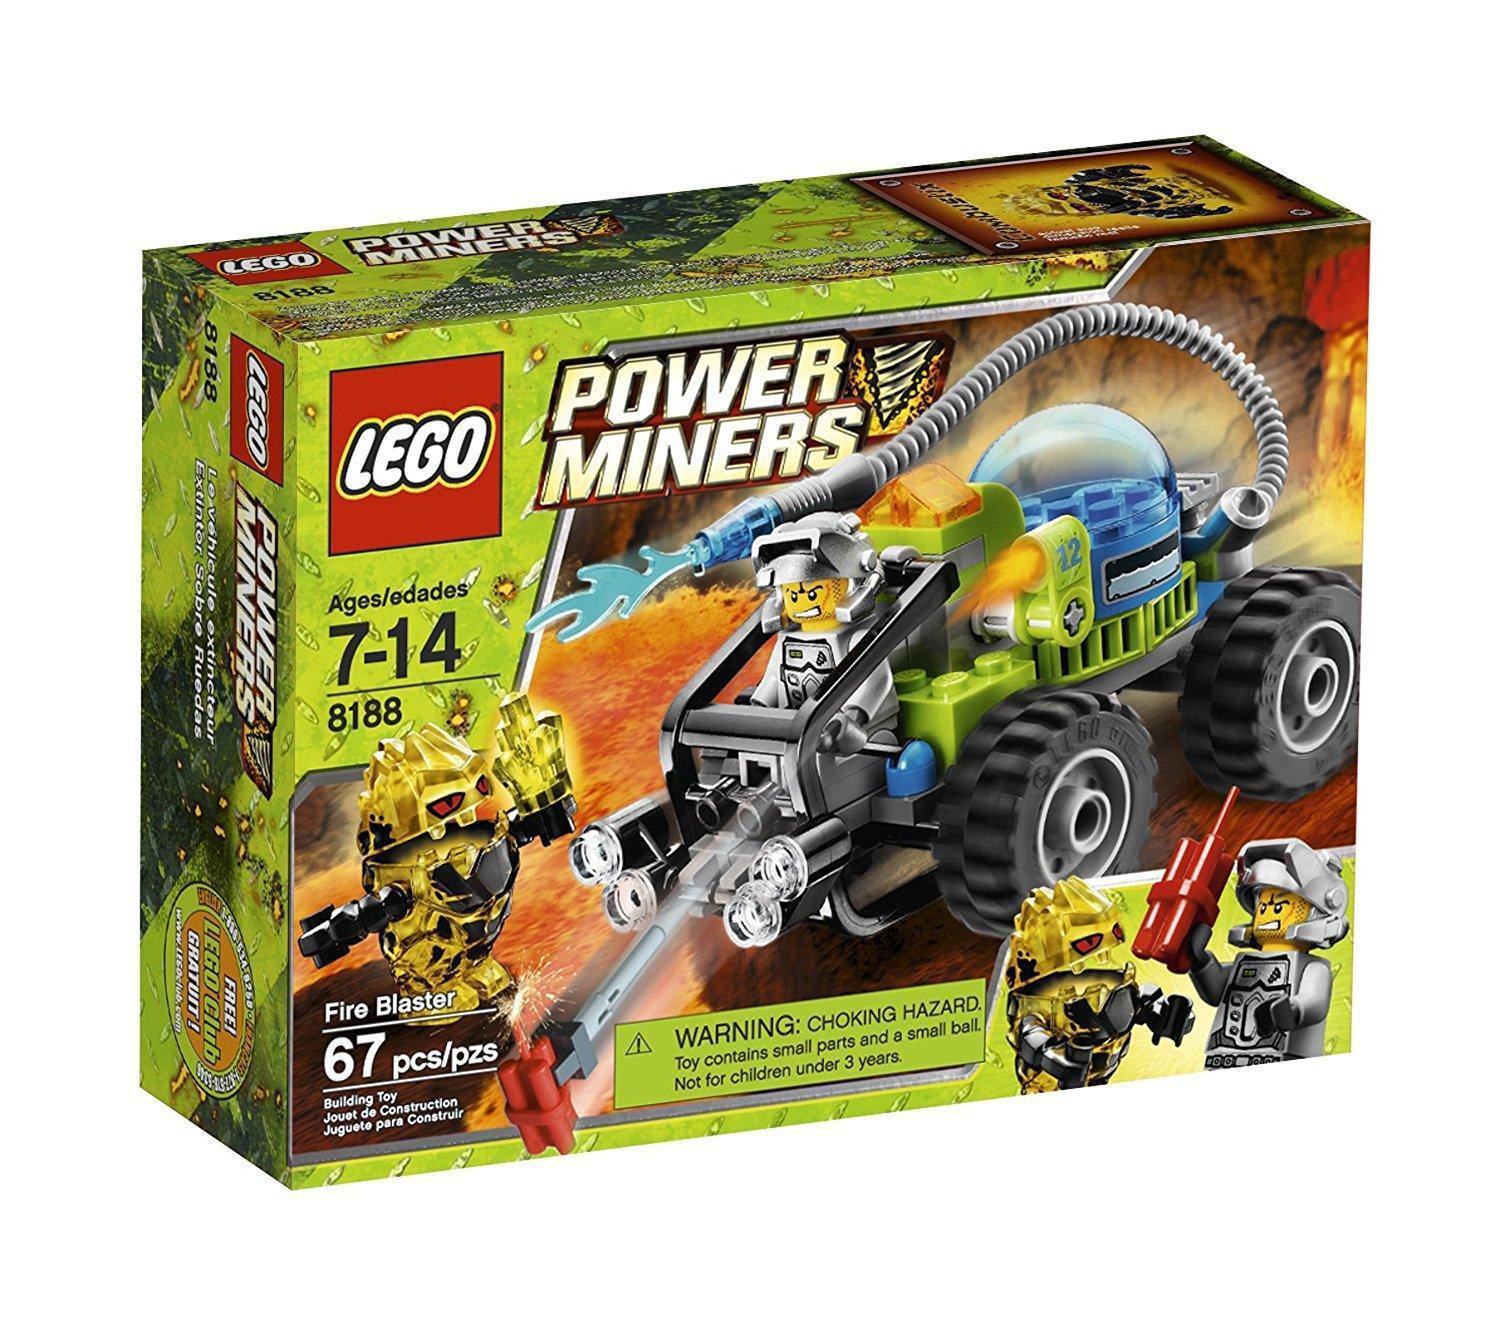 LEGO 8188 Power Miners Fire Blaster